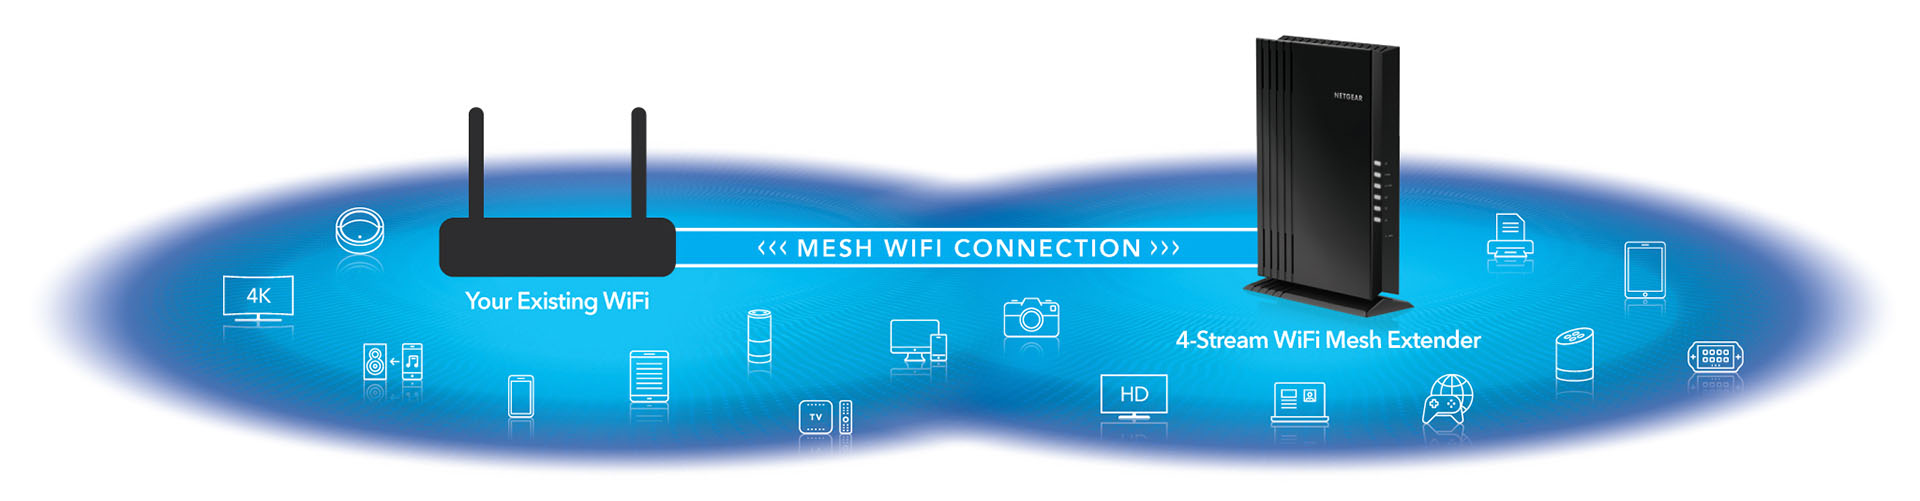 Netgear Nighthawk X4 Wi-Fi Mesh Extender Review: It Meshes Very Well